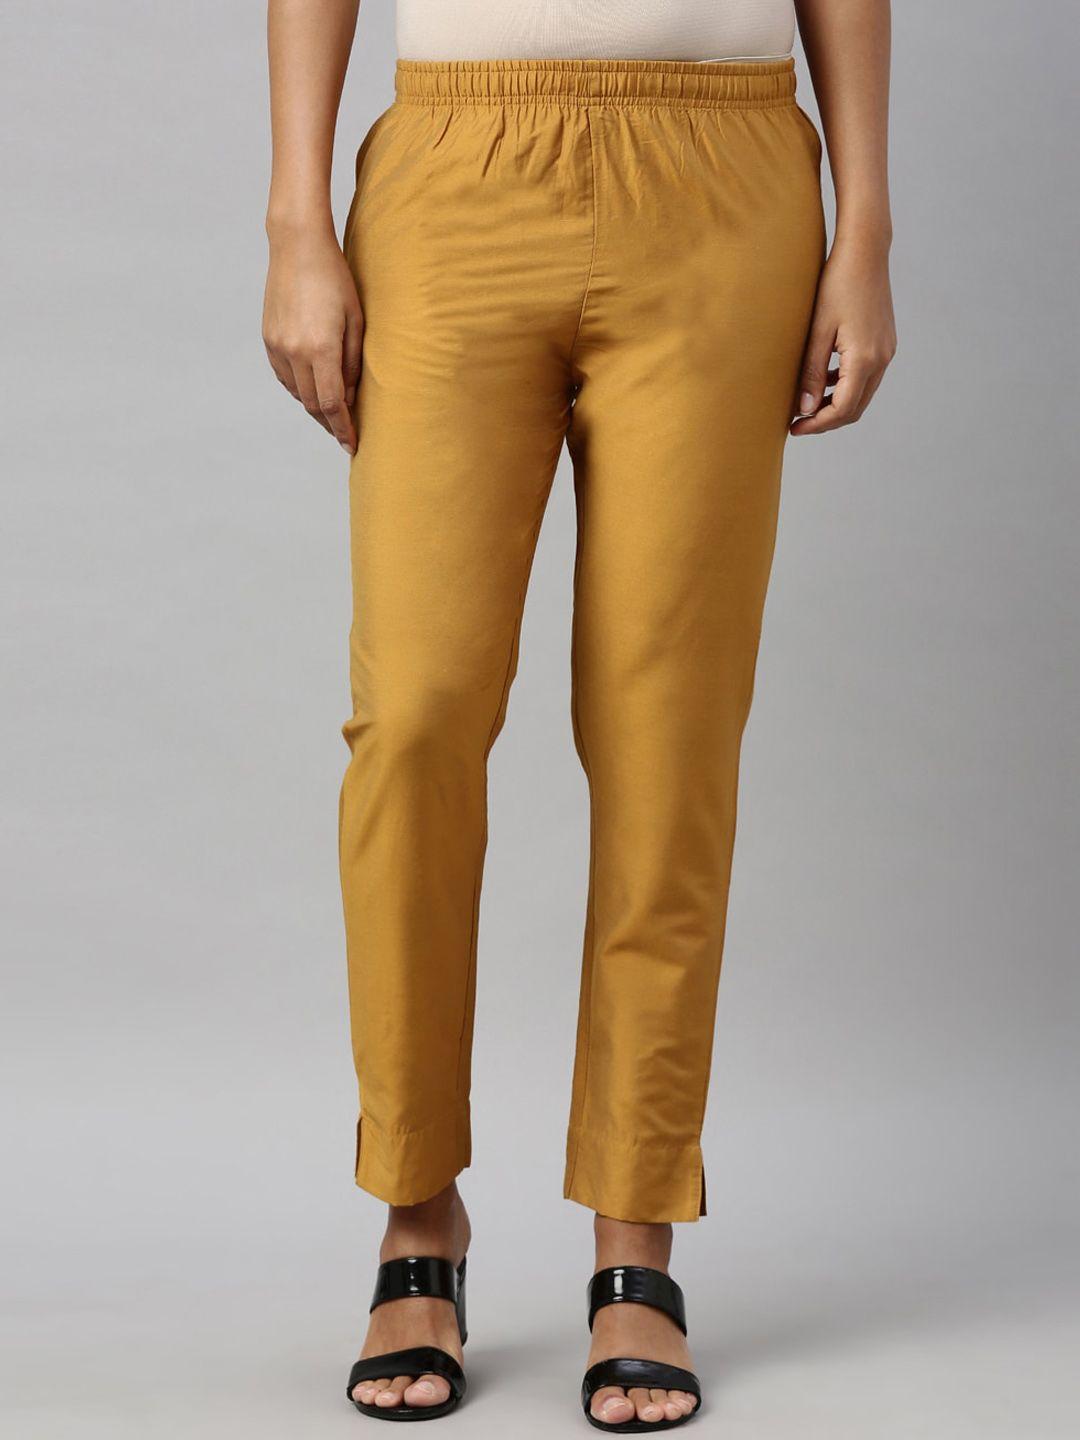 go-colors-women-metallic-mustard-yellow-mid-rise-trousers